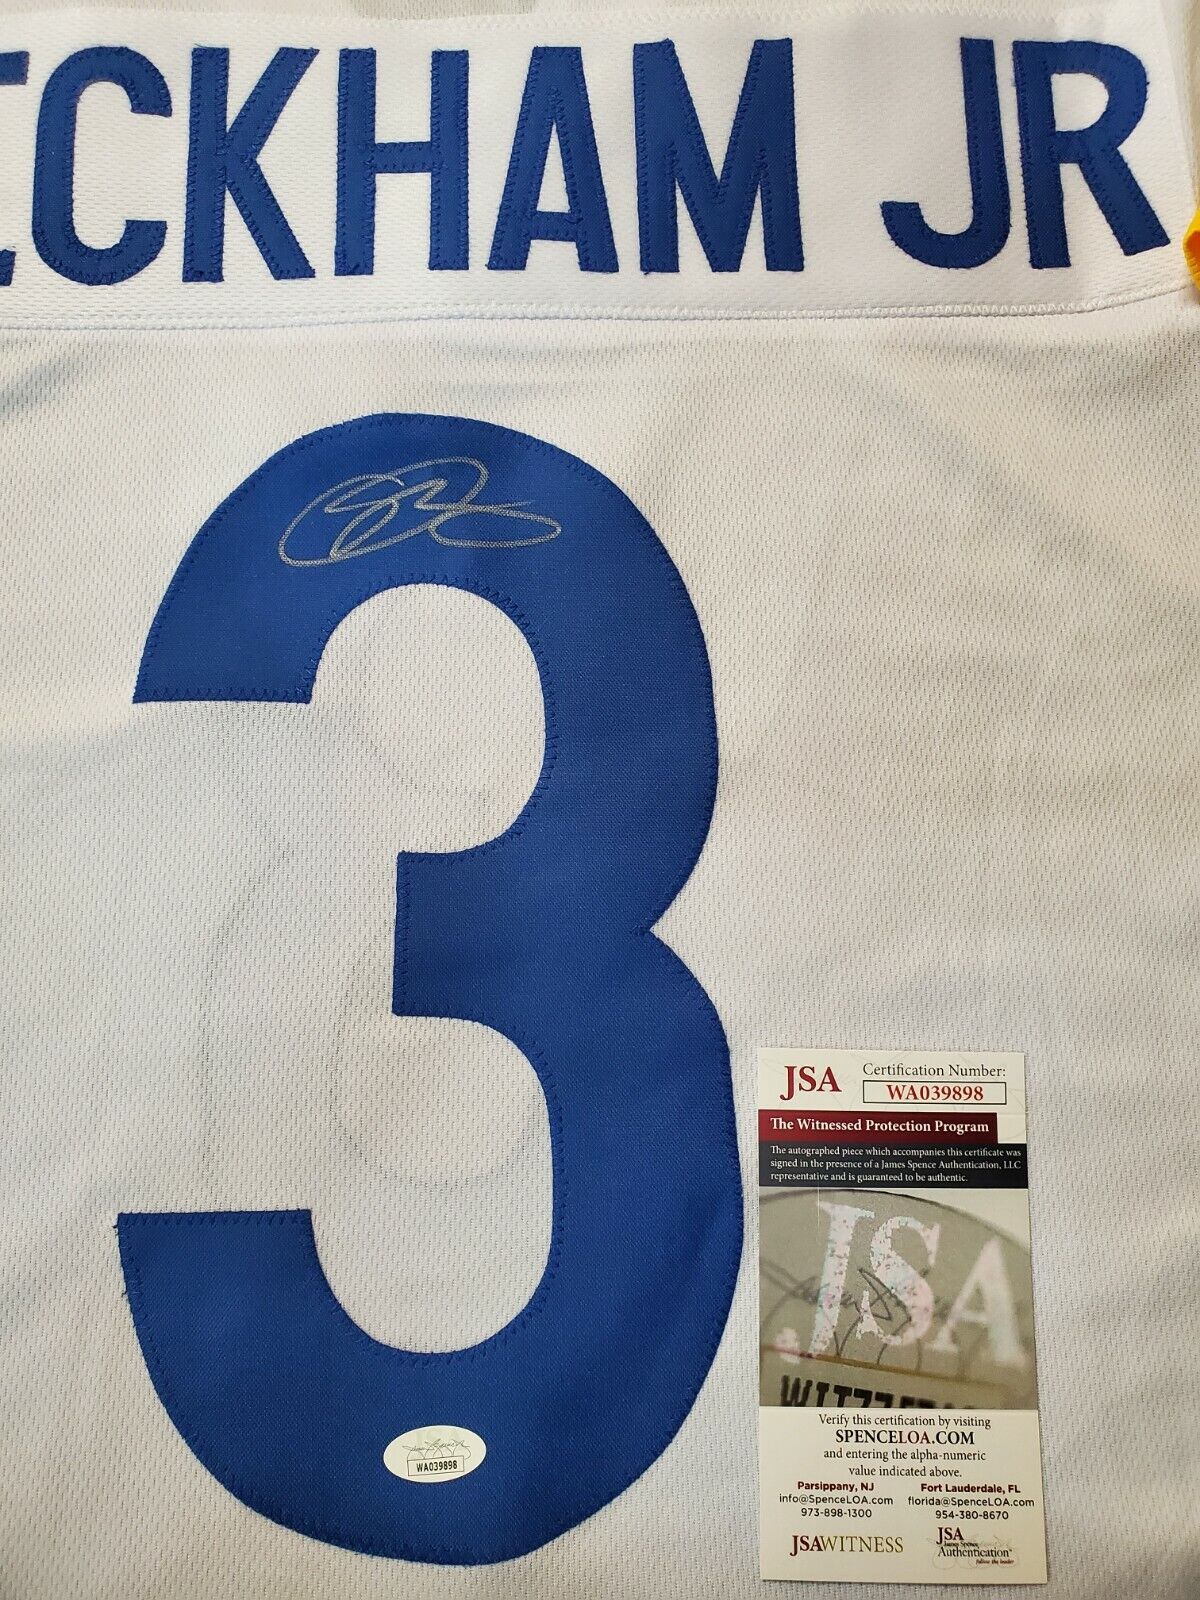 odell beckham signed jersey